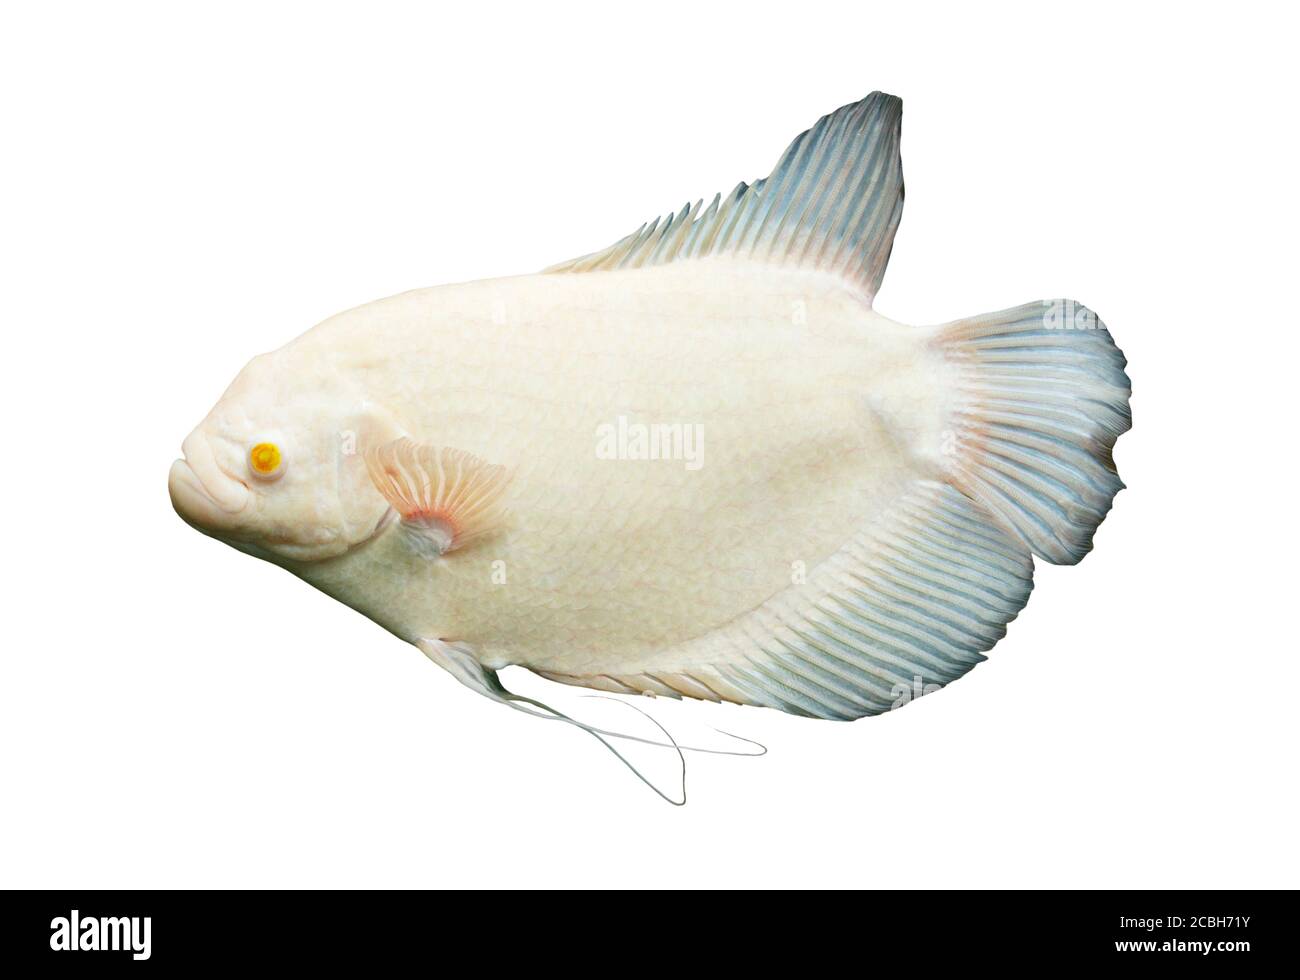 Gourami fish isolated on white background Stock Photo